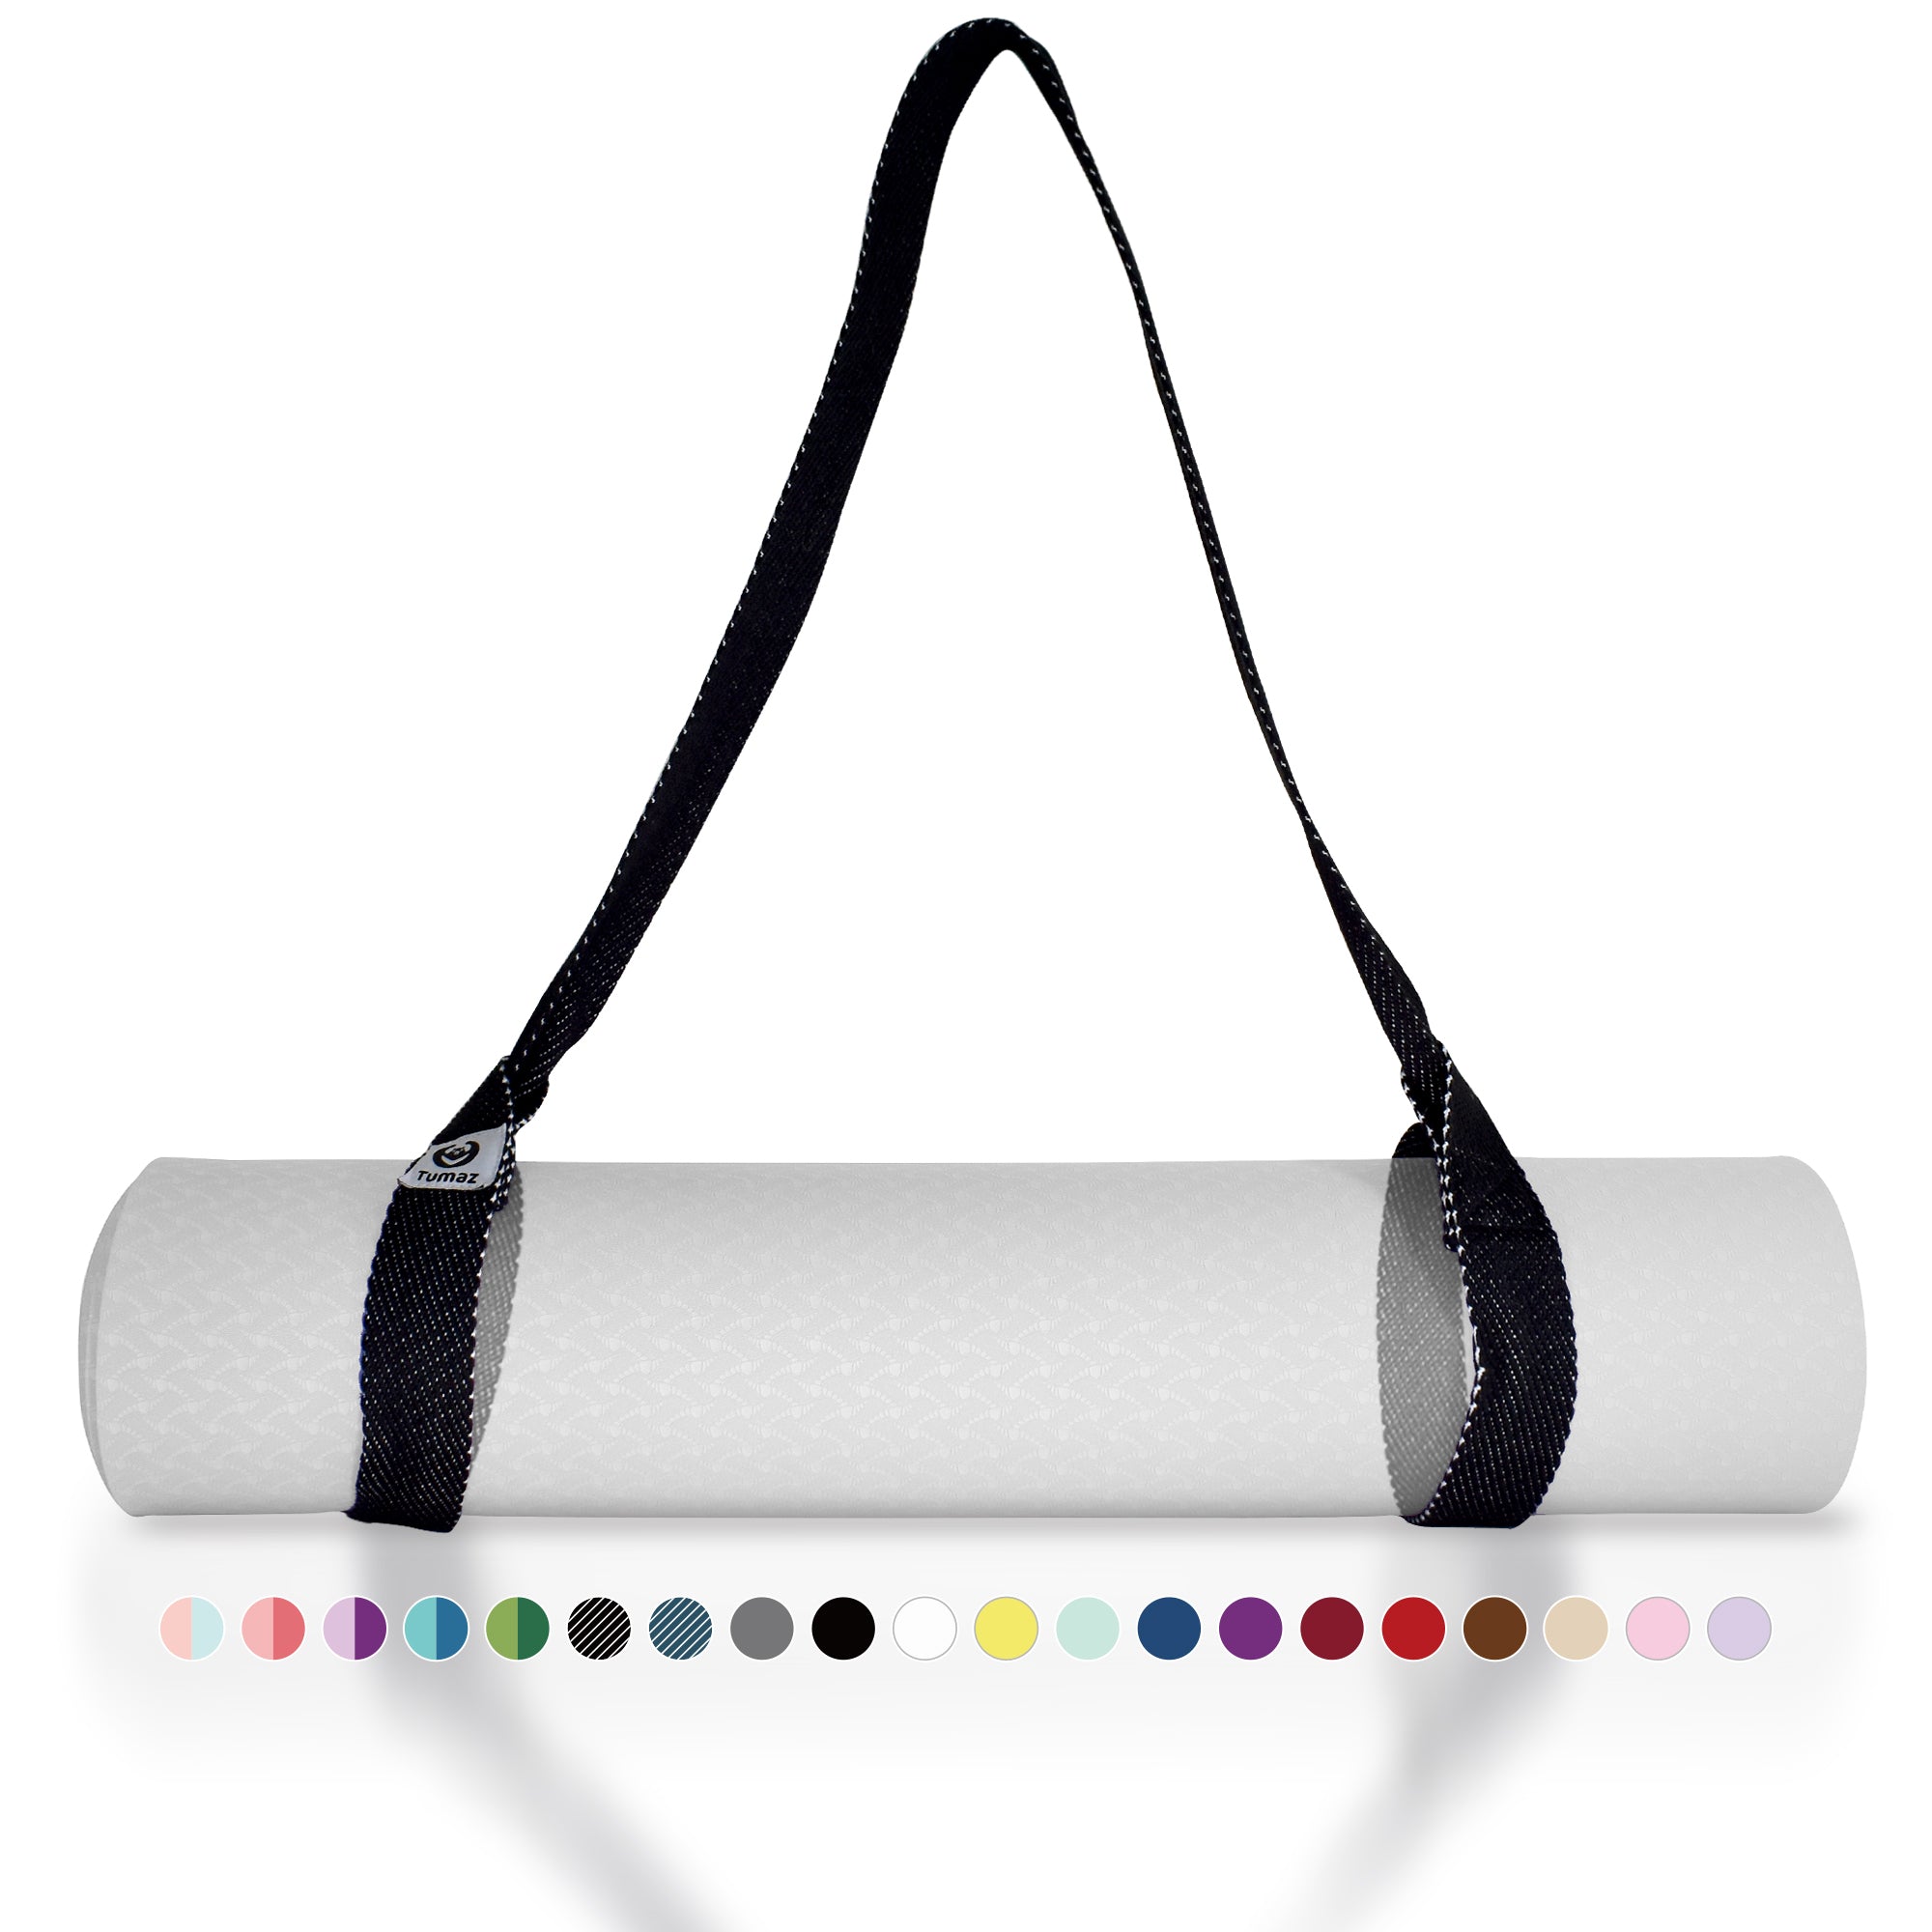 Tumaz Yoga Strap/Stretch Bands [15+ Colors, 6/8/10 Feet Options